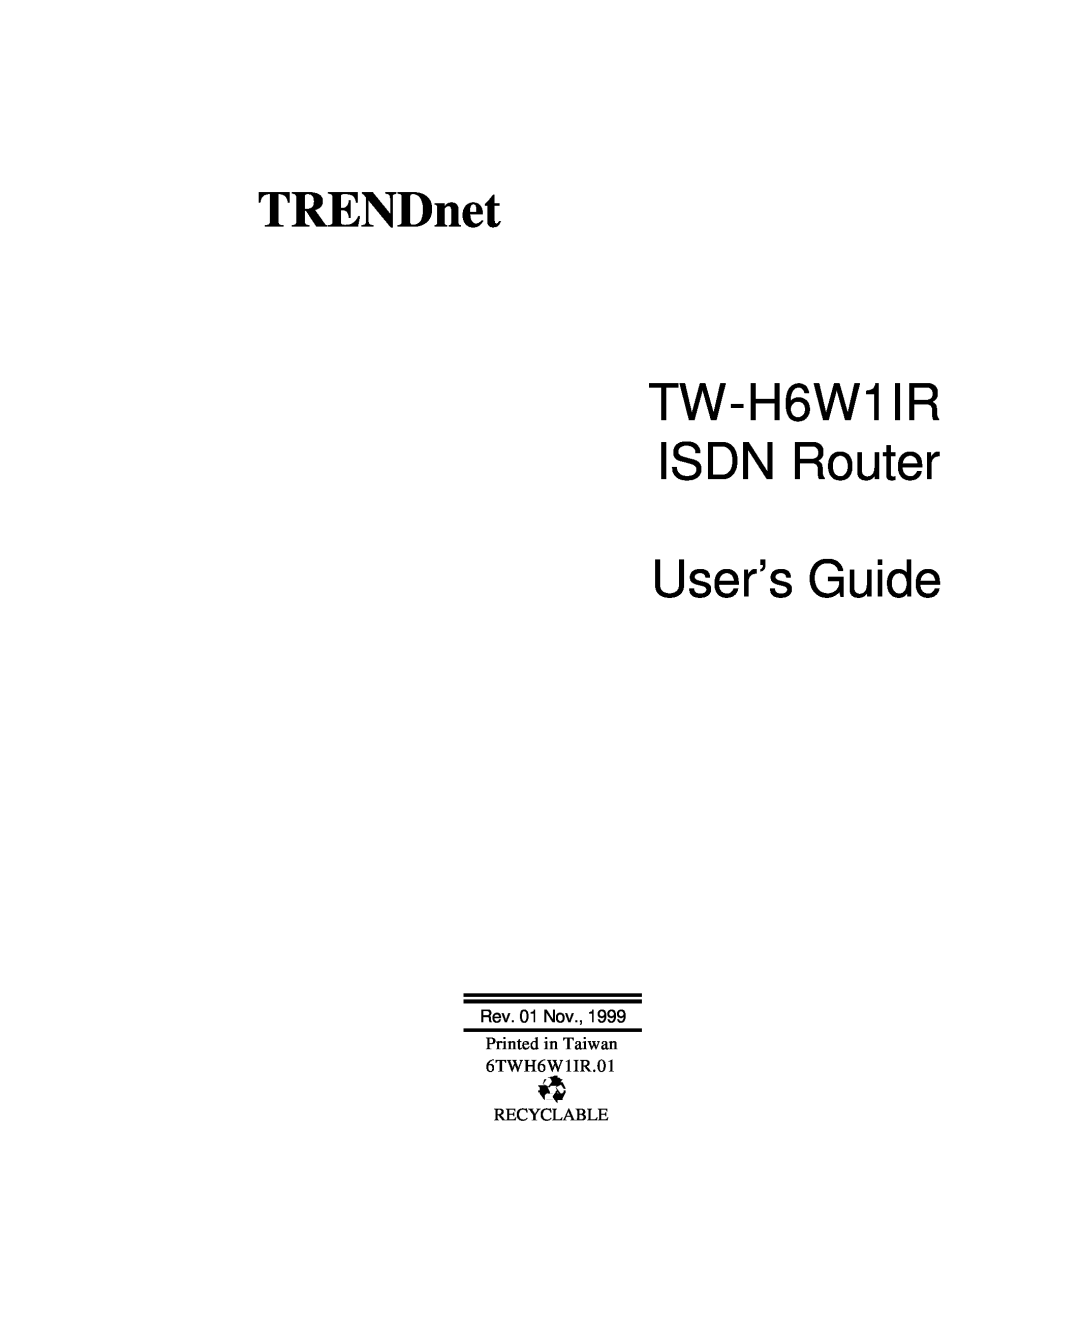 TRENDnet manual TRENDnet, TW-H6W1IR ISDN Router User’s Guide, Rev. 01 Nov 